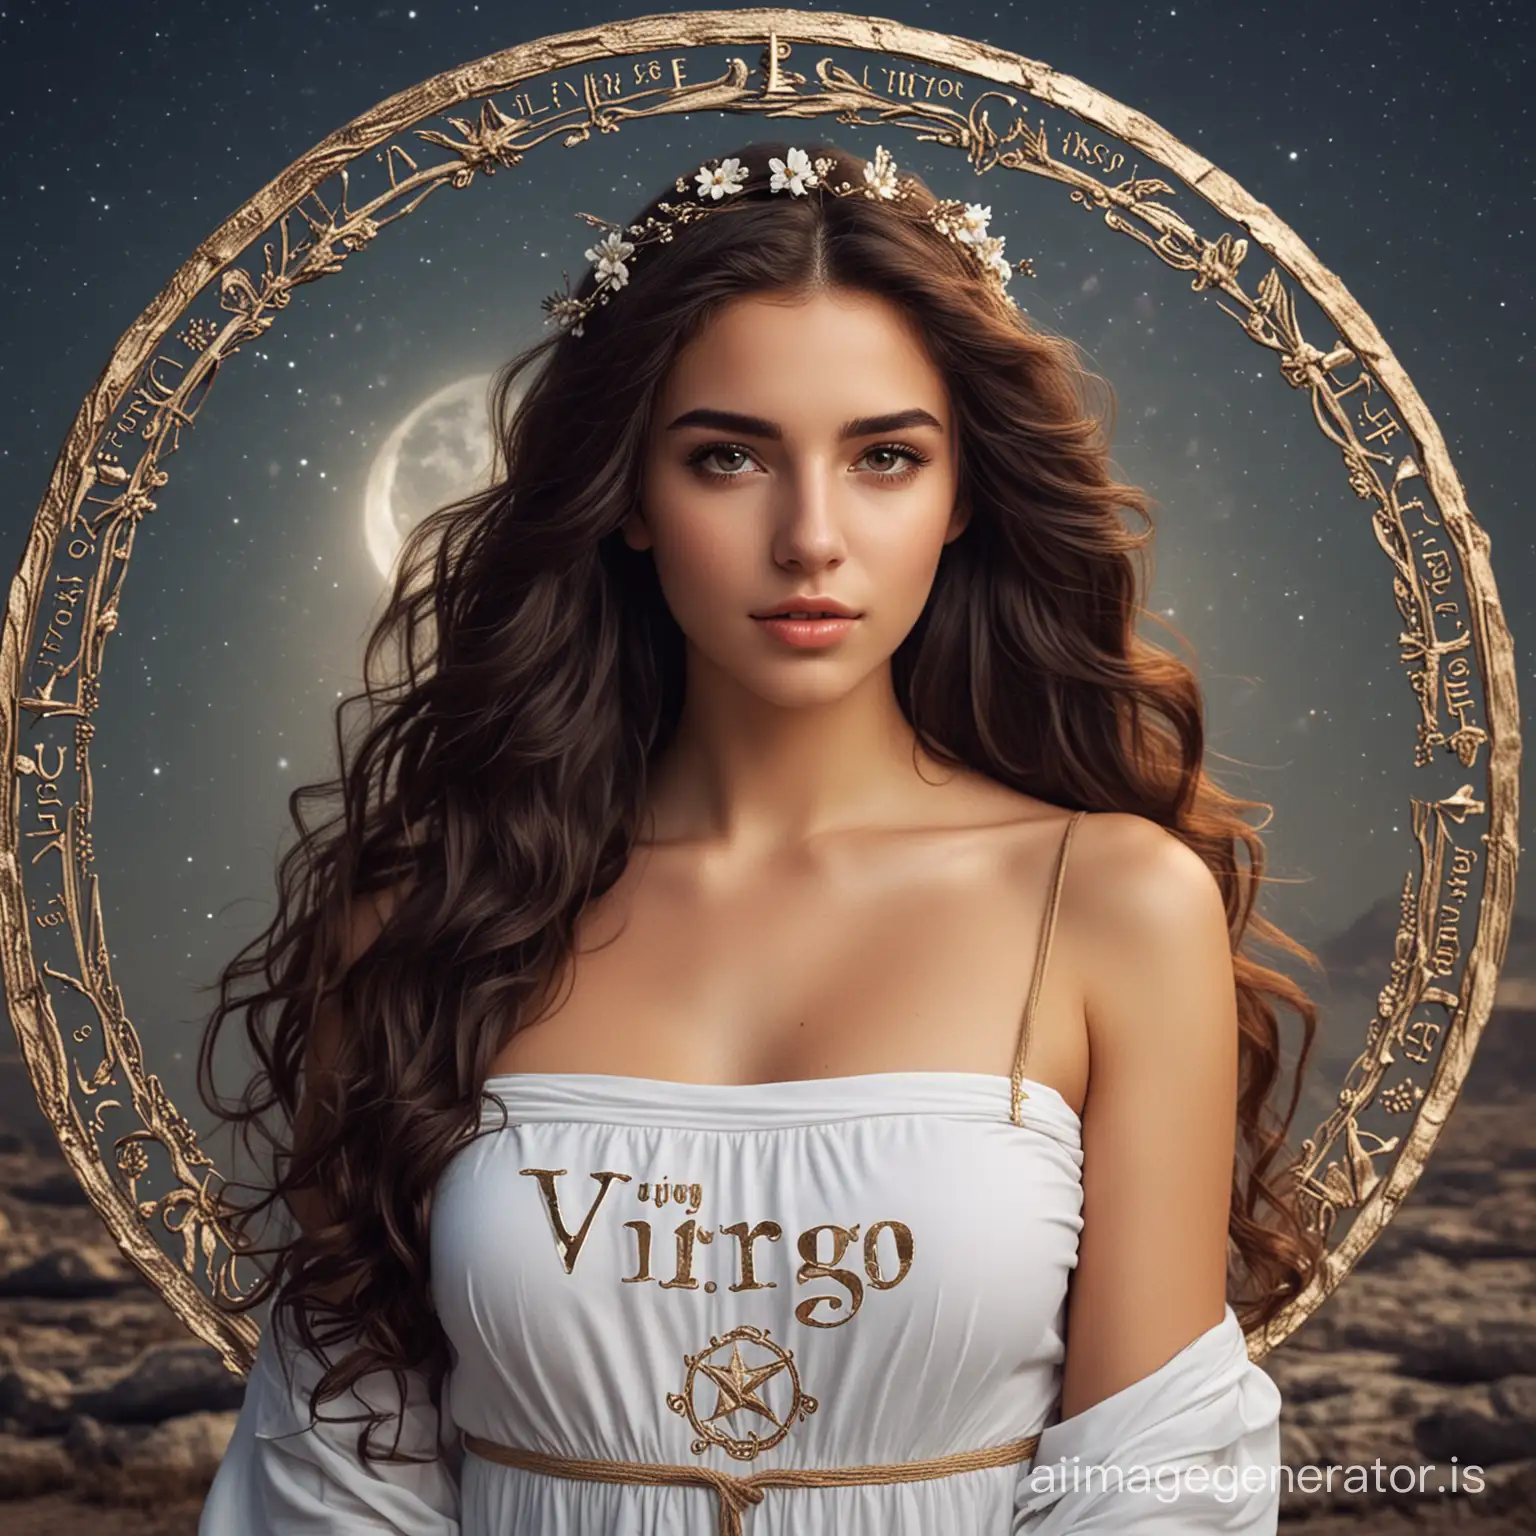 Virgo zodiac sign, symbol of virginity, pure, sexy beauty, Greek girl